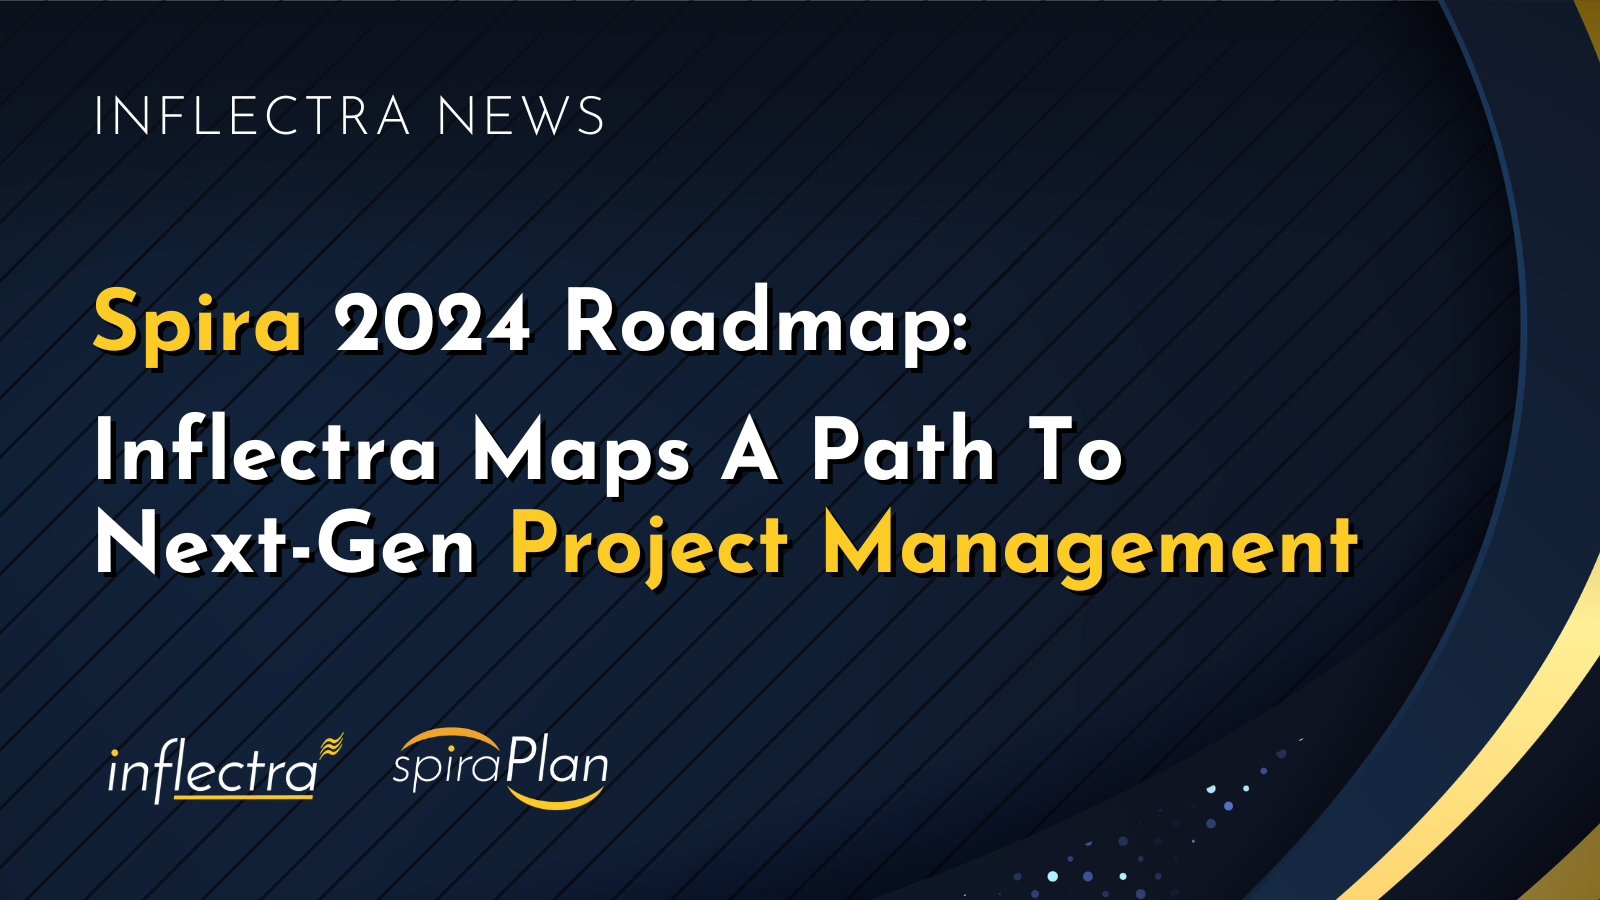 inflectra-news-spira-2024-roadmap-a-path-to-next-gen-project-management-image